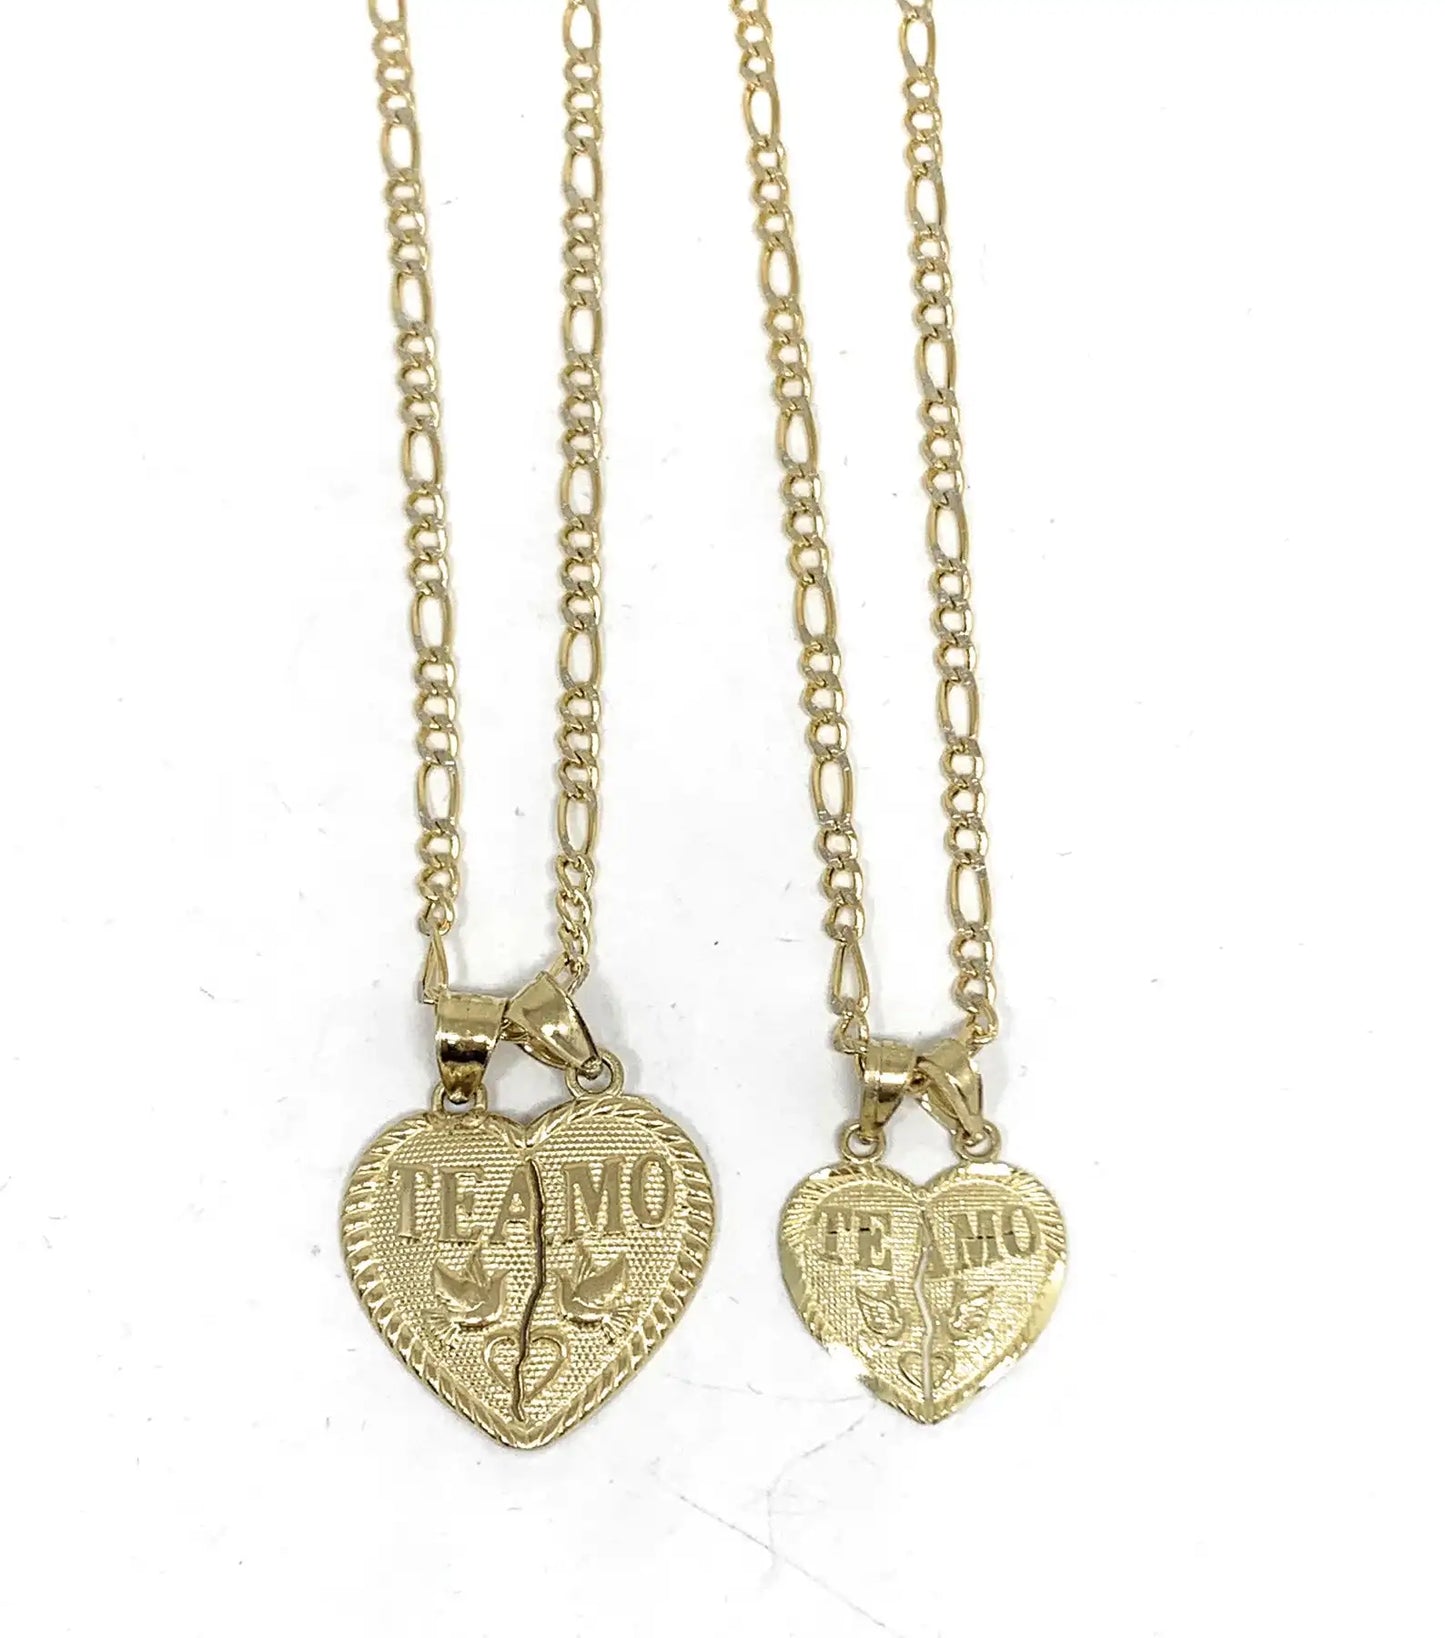 "TE AMO" Heart Shape 18K Gold Plated Necklace